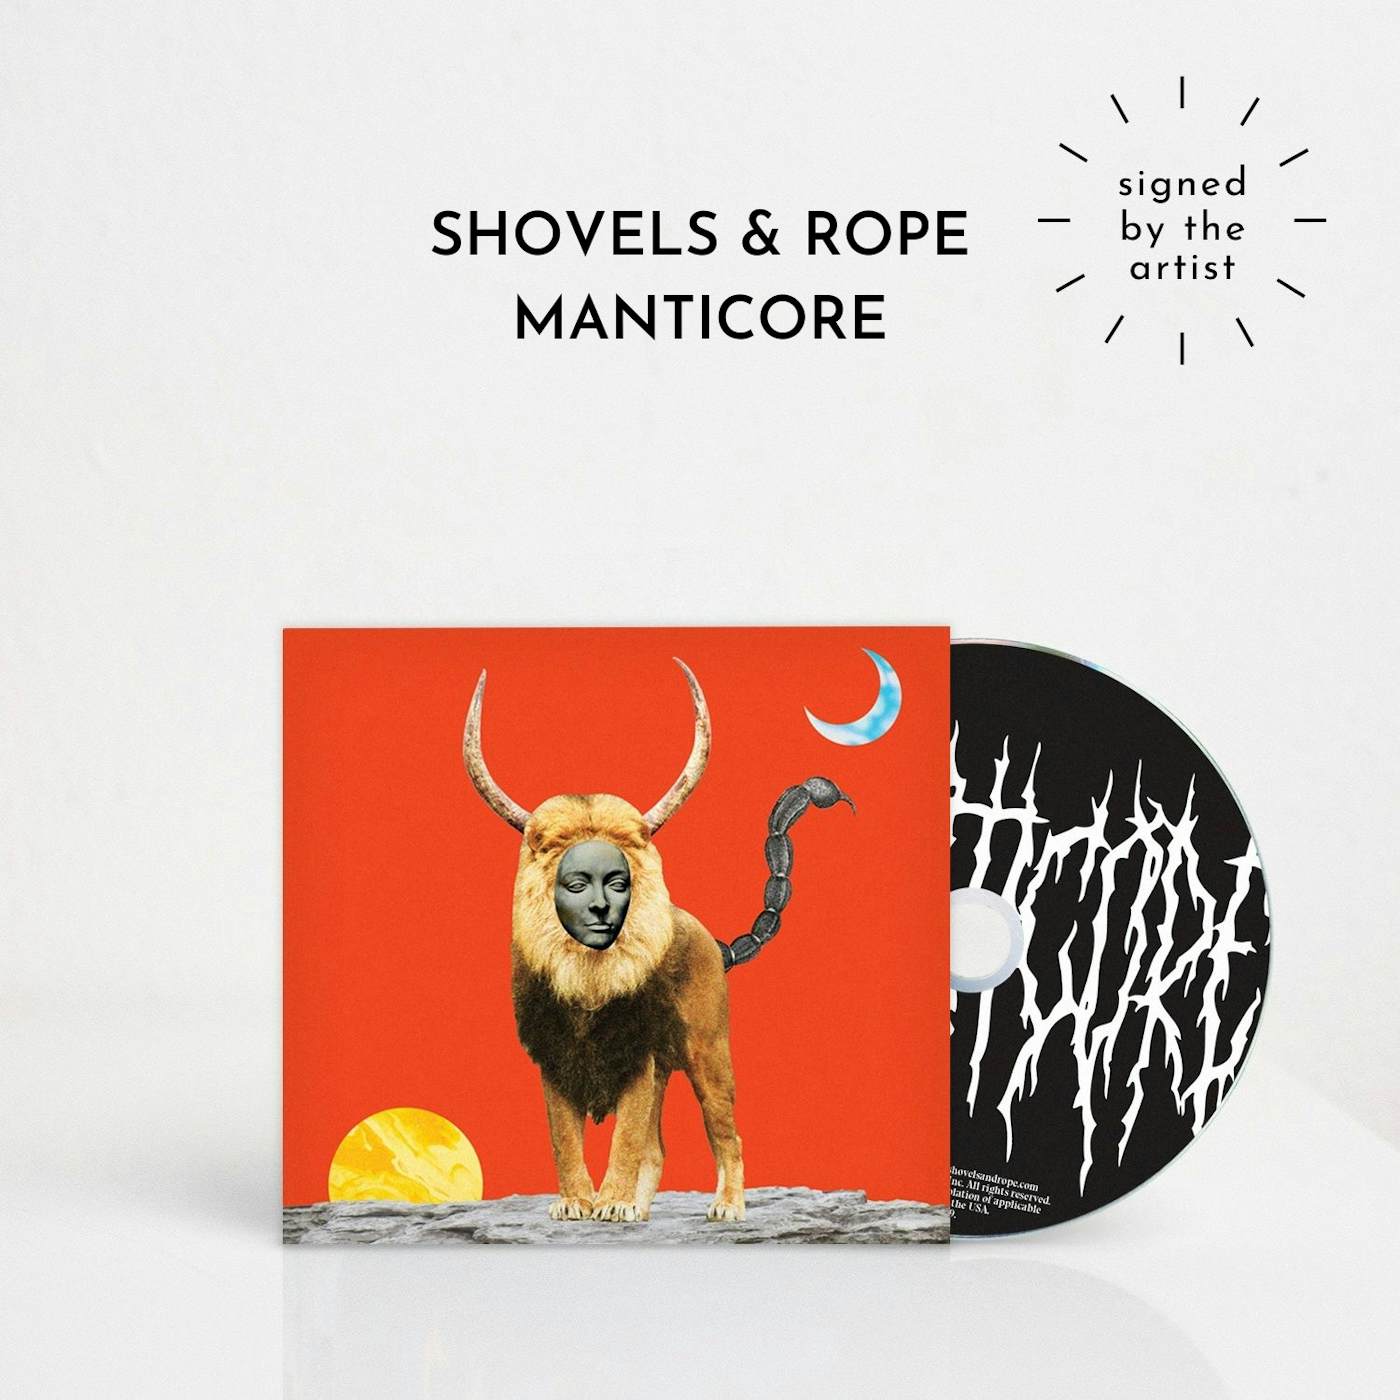 Shovels & Rope Manticore (Signed CD)